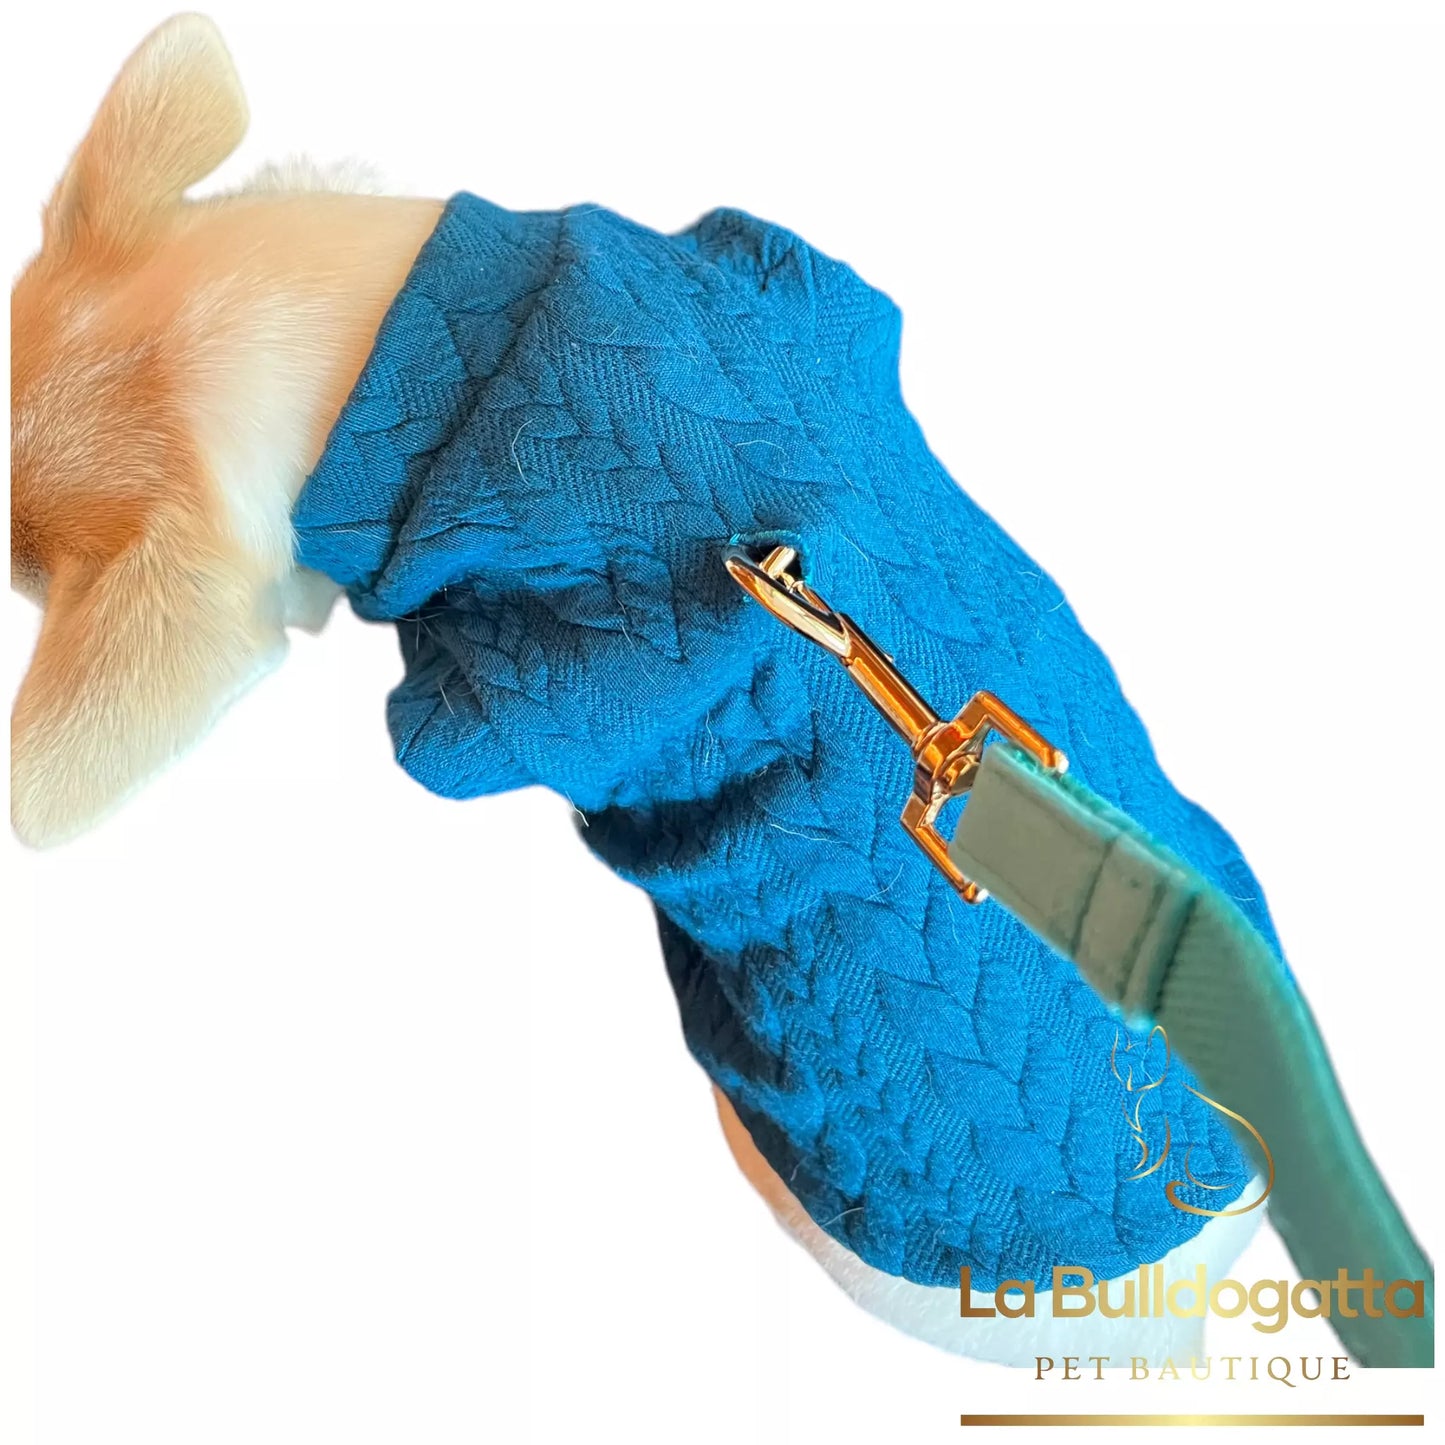 Felpina cane Knit Blu royal